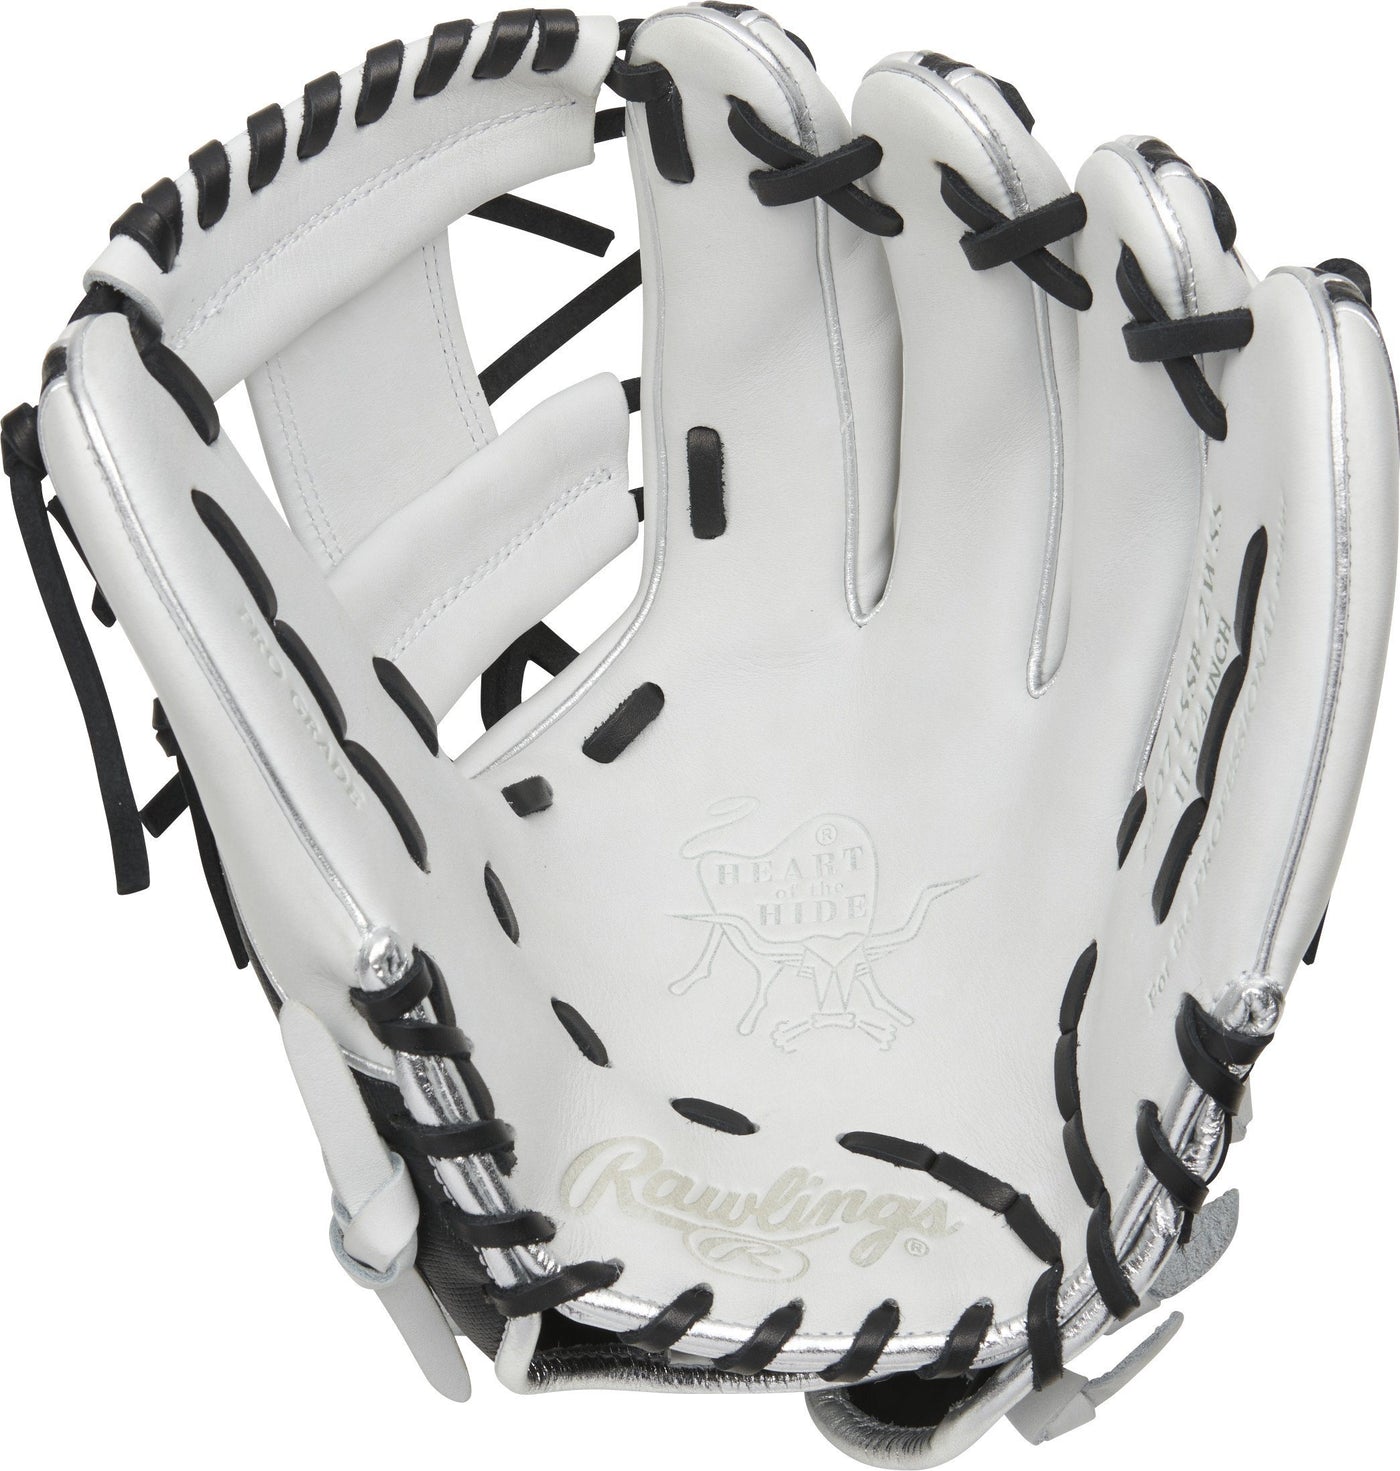 Rawlings Heart of The Hide 11.75 Fastpitch Softball Glove: PRO715SB-6N